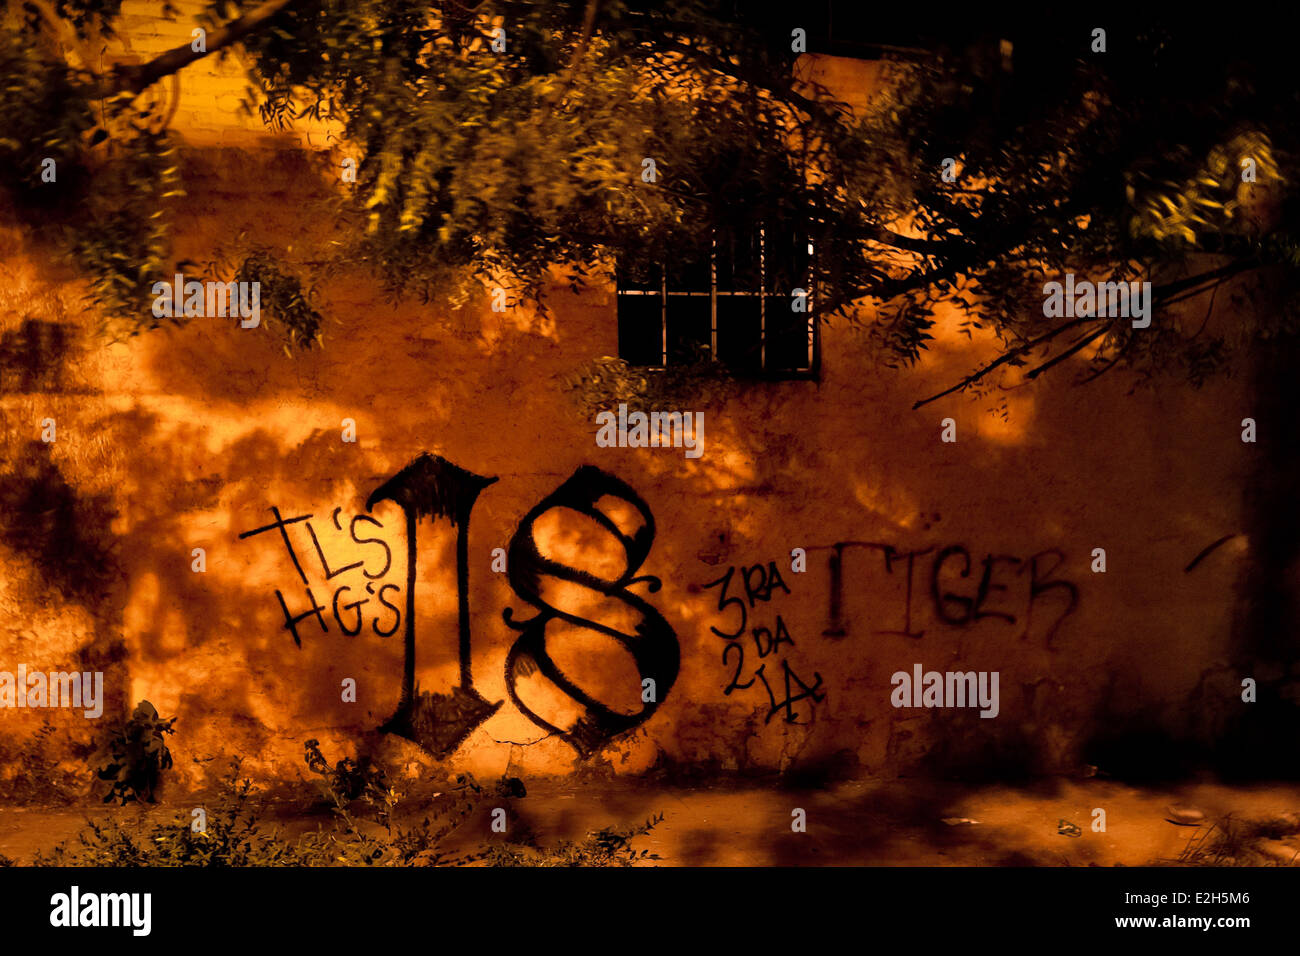 A Barrio 18 gang graffiti, a symbol marking the gang's territory, is seen in Soyapango, San Salvador, El Salvador. Stock Photo